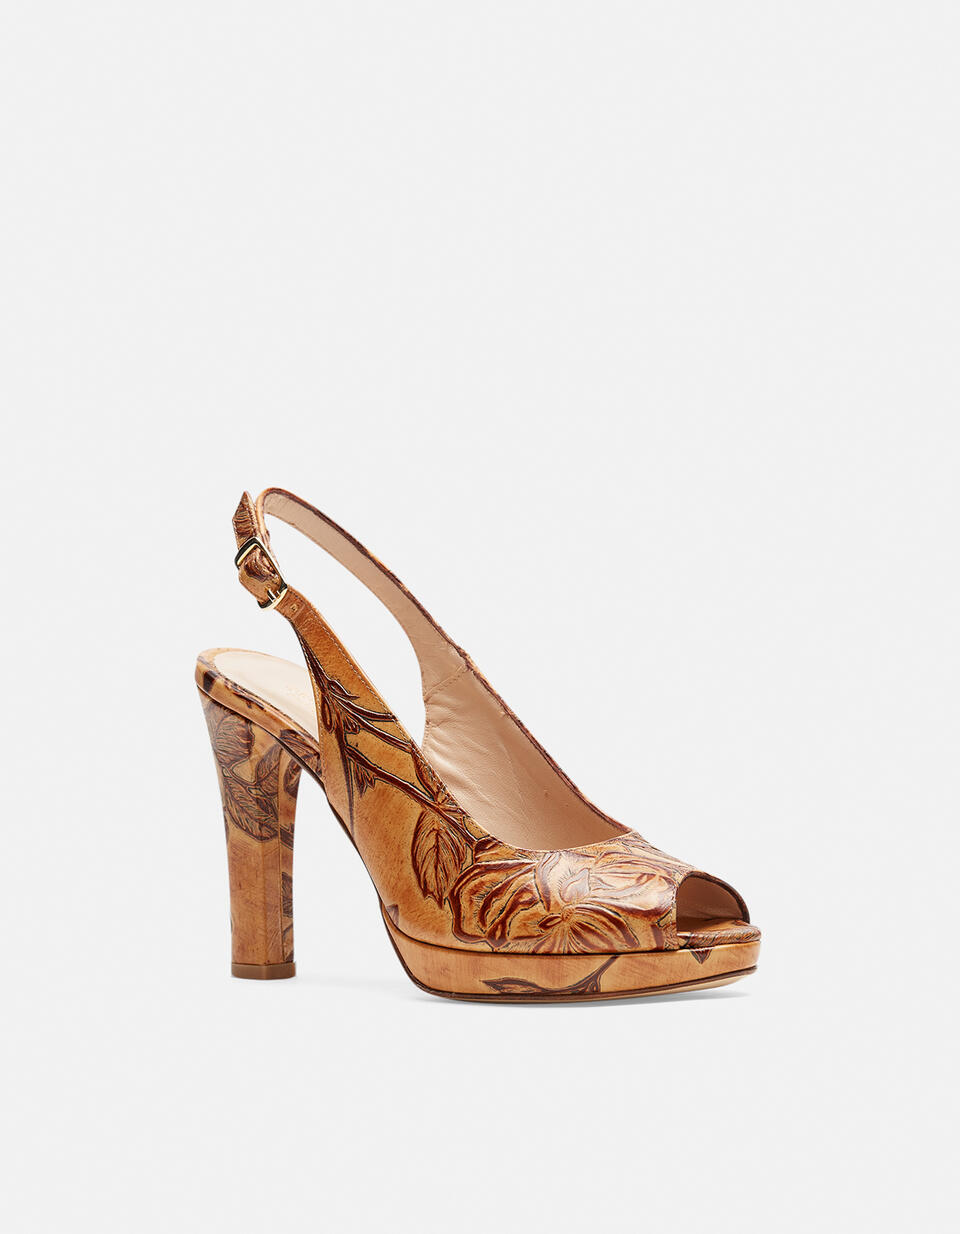 Monroe Sandale Beige  - Schuhe - Special Price - Cuoieria Fiorentina